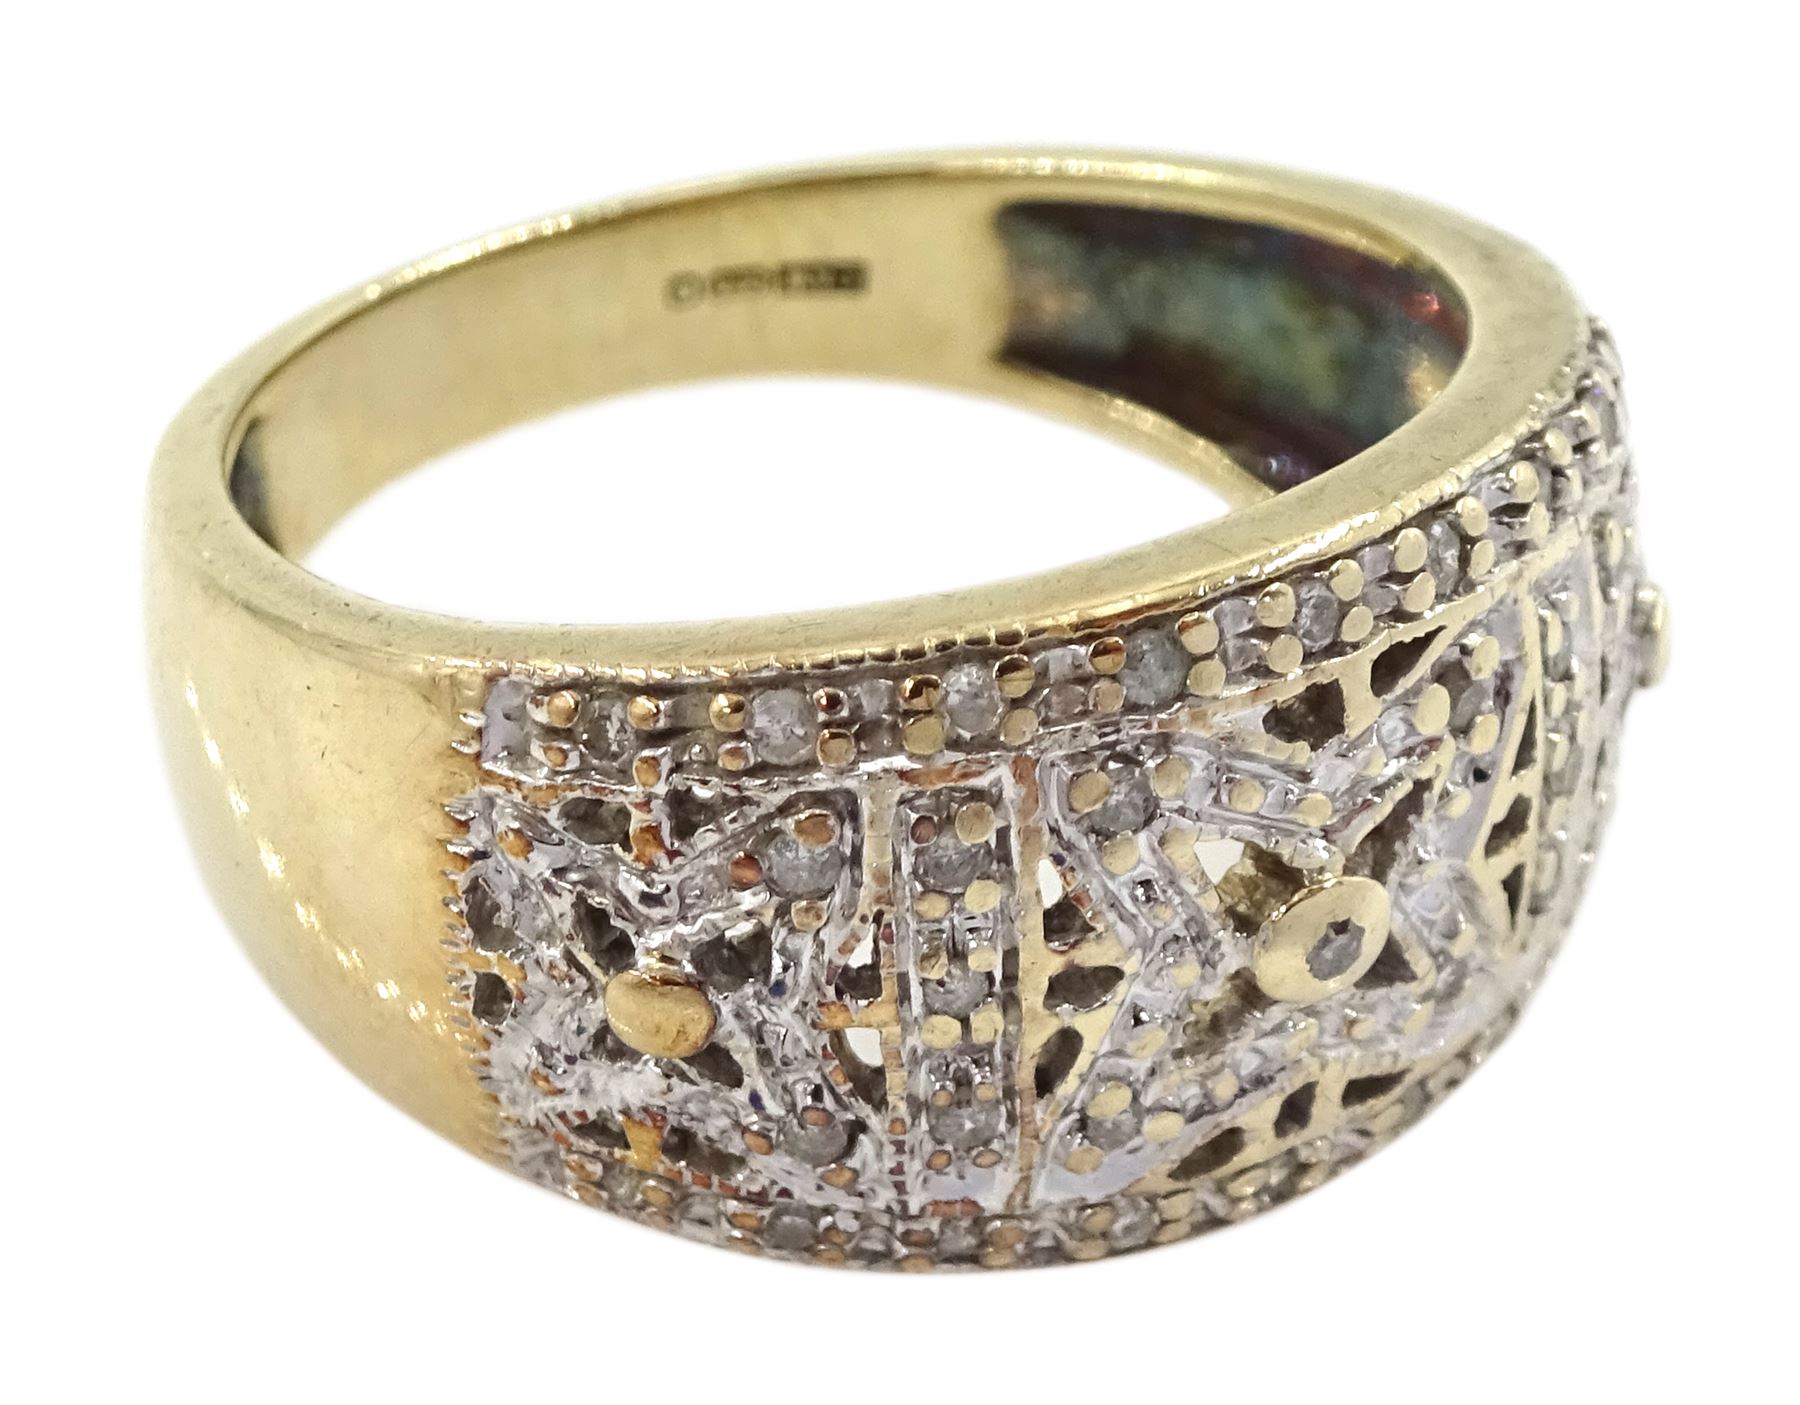 9ct gold pierced design diamond chip ring - Image 3 of 4